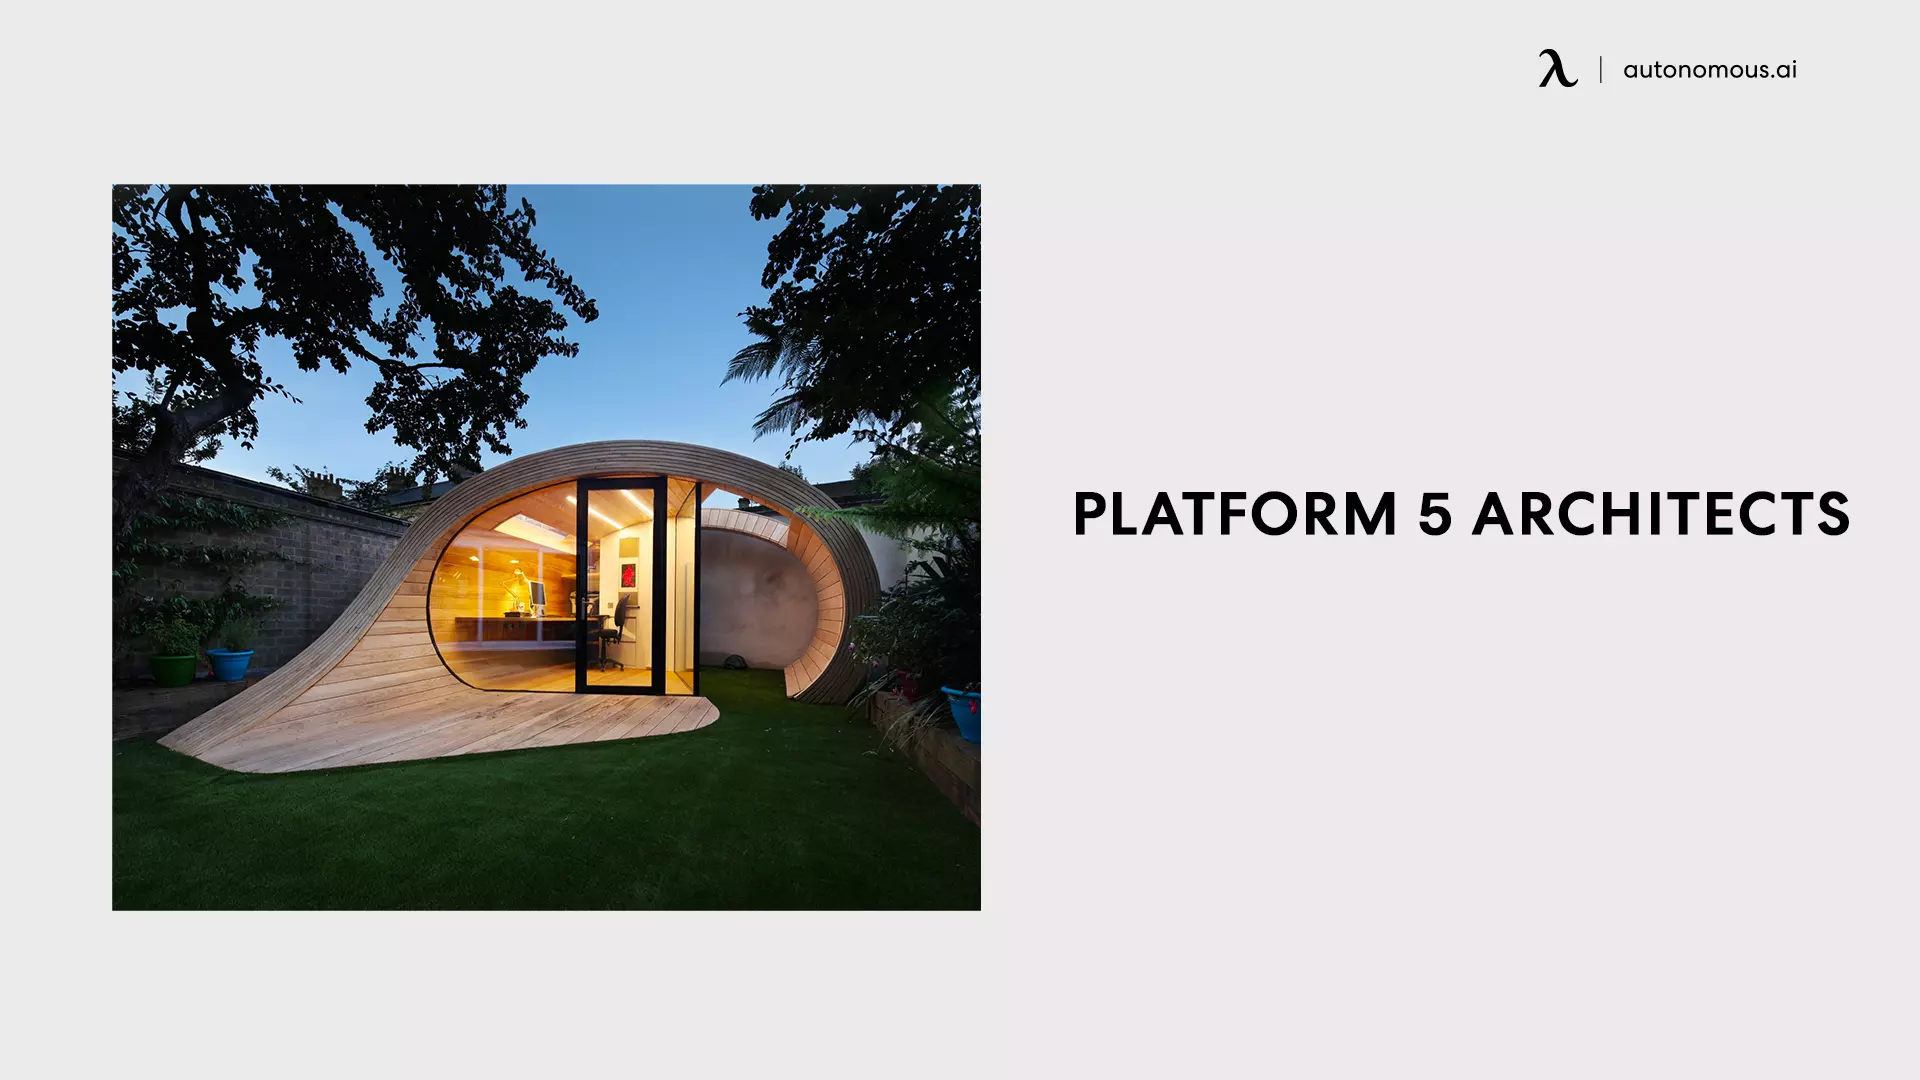 Platform 5 Architects - she shed ideas